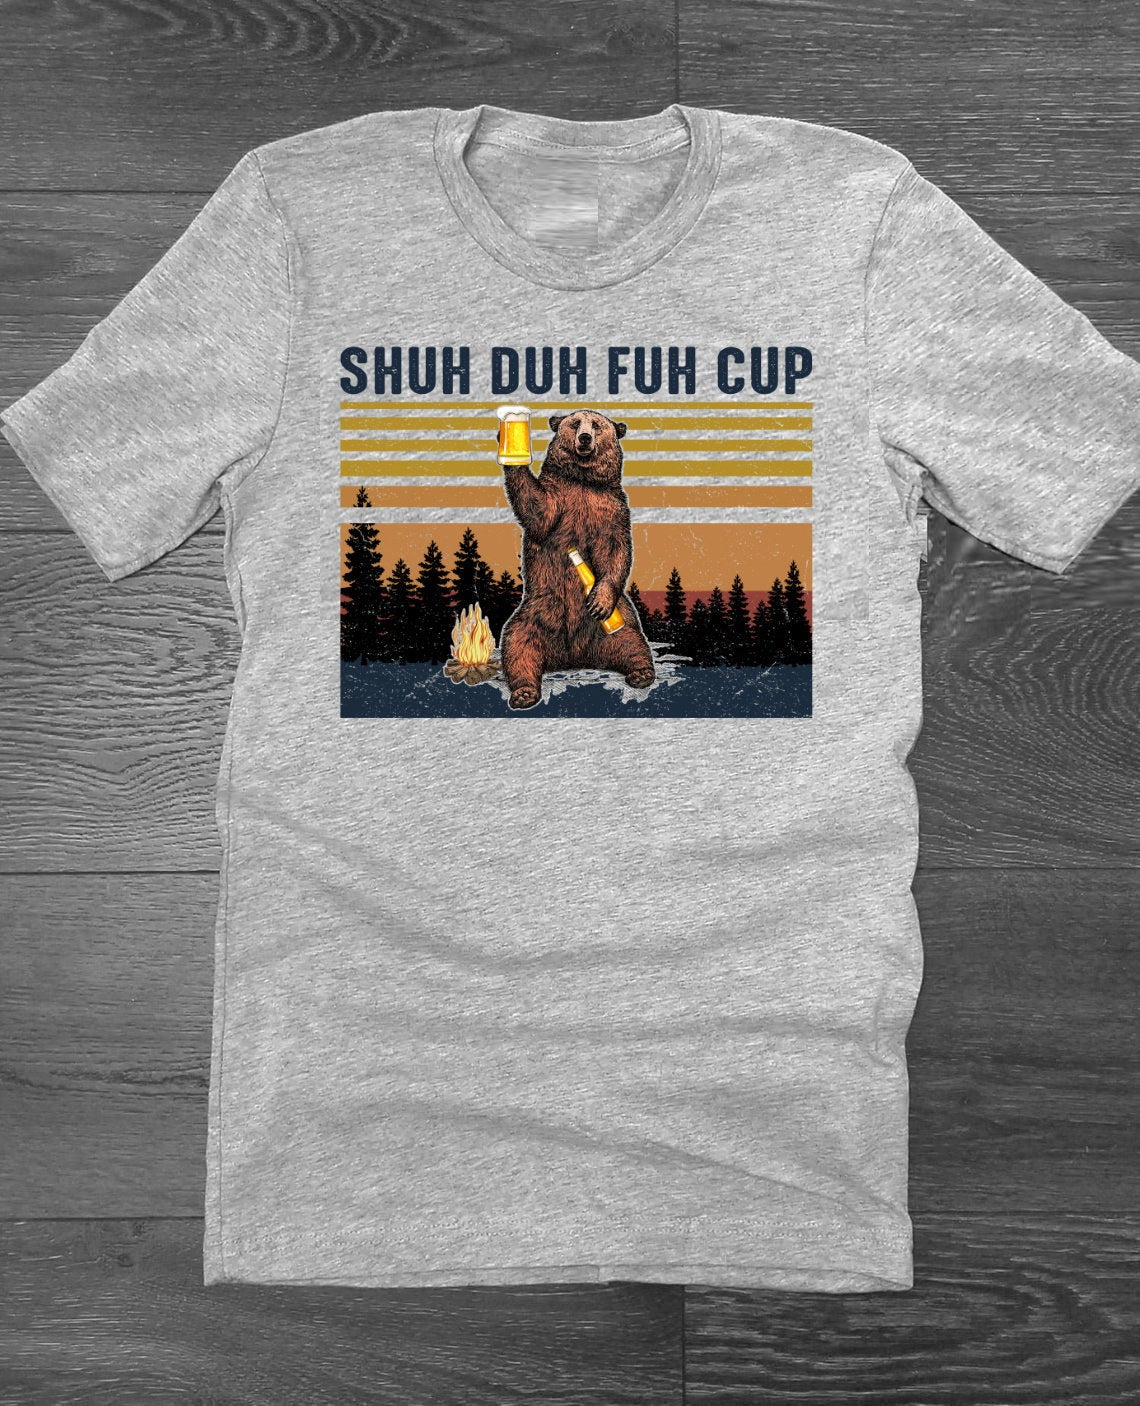 Shuh Duh Fuh Cup Adult Humor Bear With Beer Funny Shirt Novelty T-shirt Tee